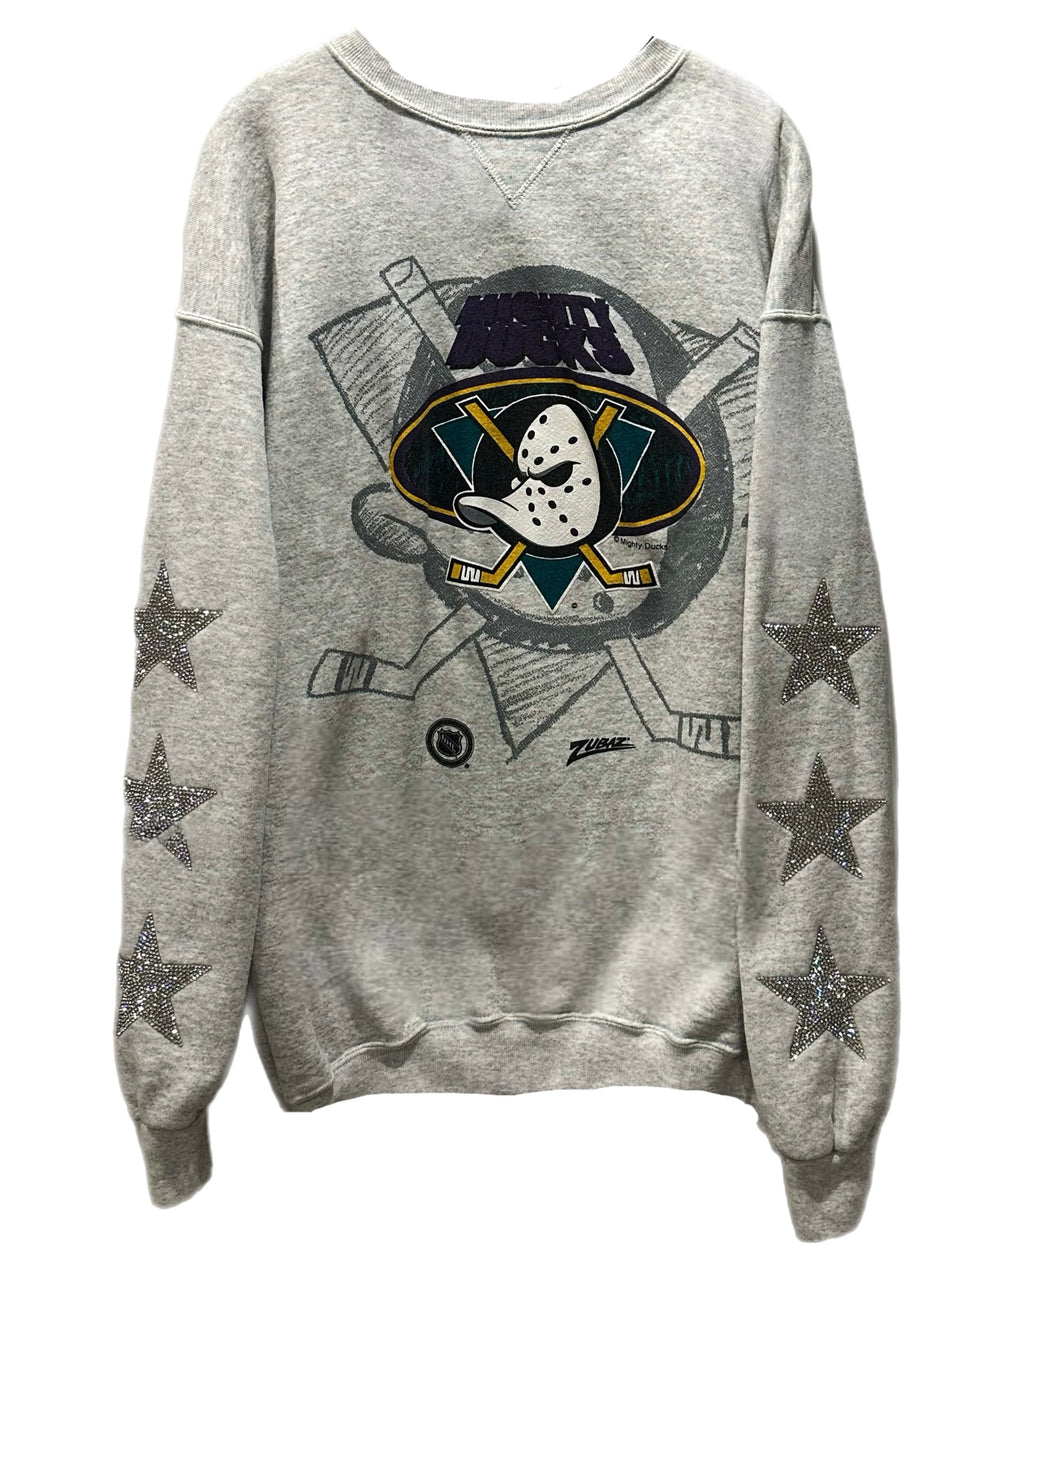 Anaheim Ducks, NHL One of a KIND Vintage “Mighty Ducks” Sweatshirt with Three Crystal Star Design.